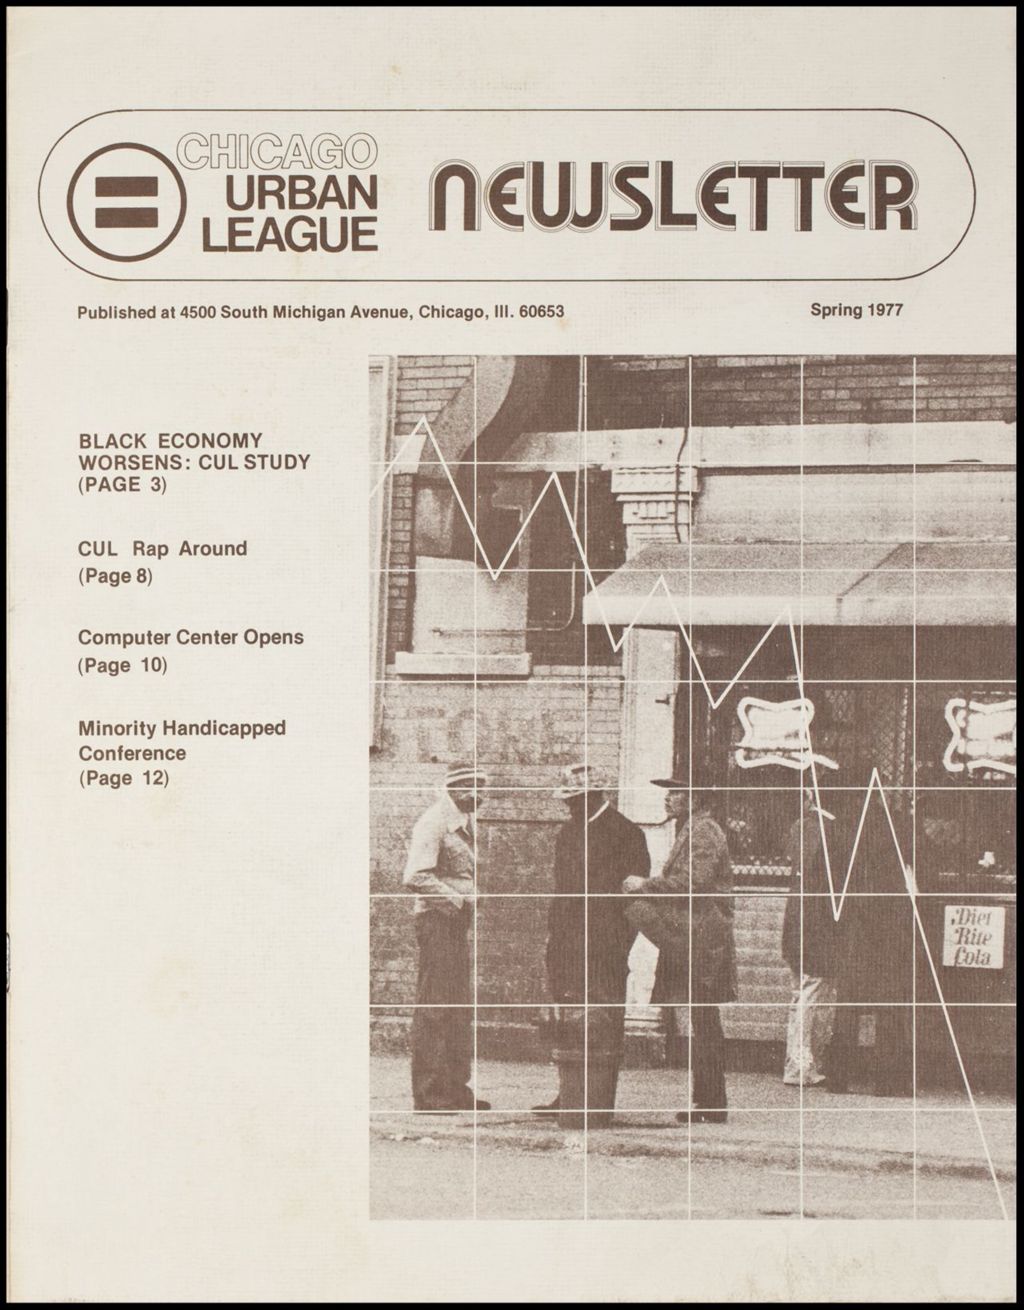 Miniature of CUL Newsletter, 1977 (Folder IV-730)